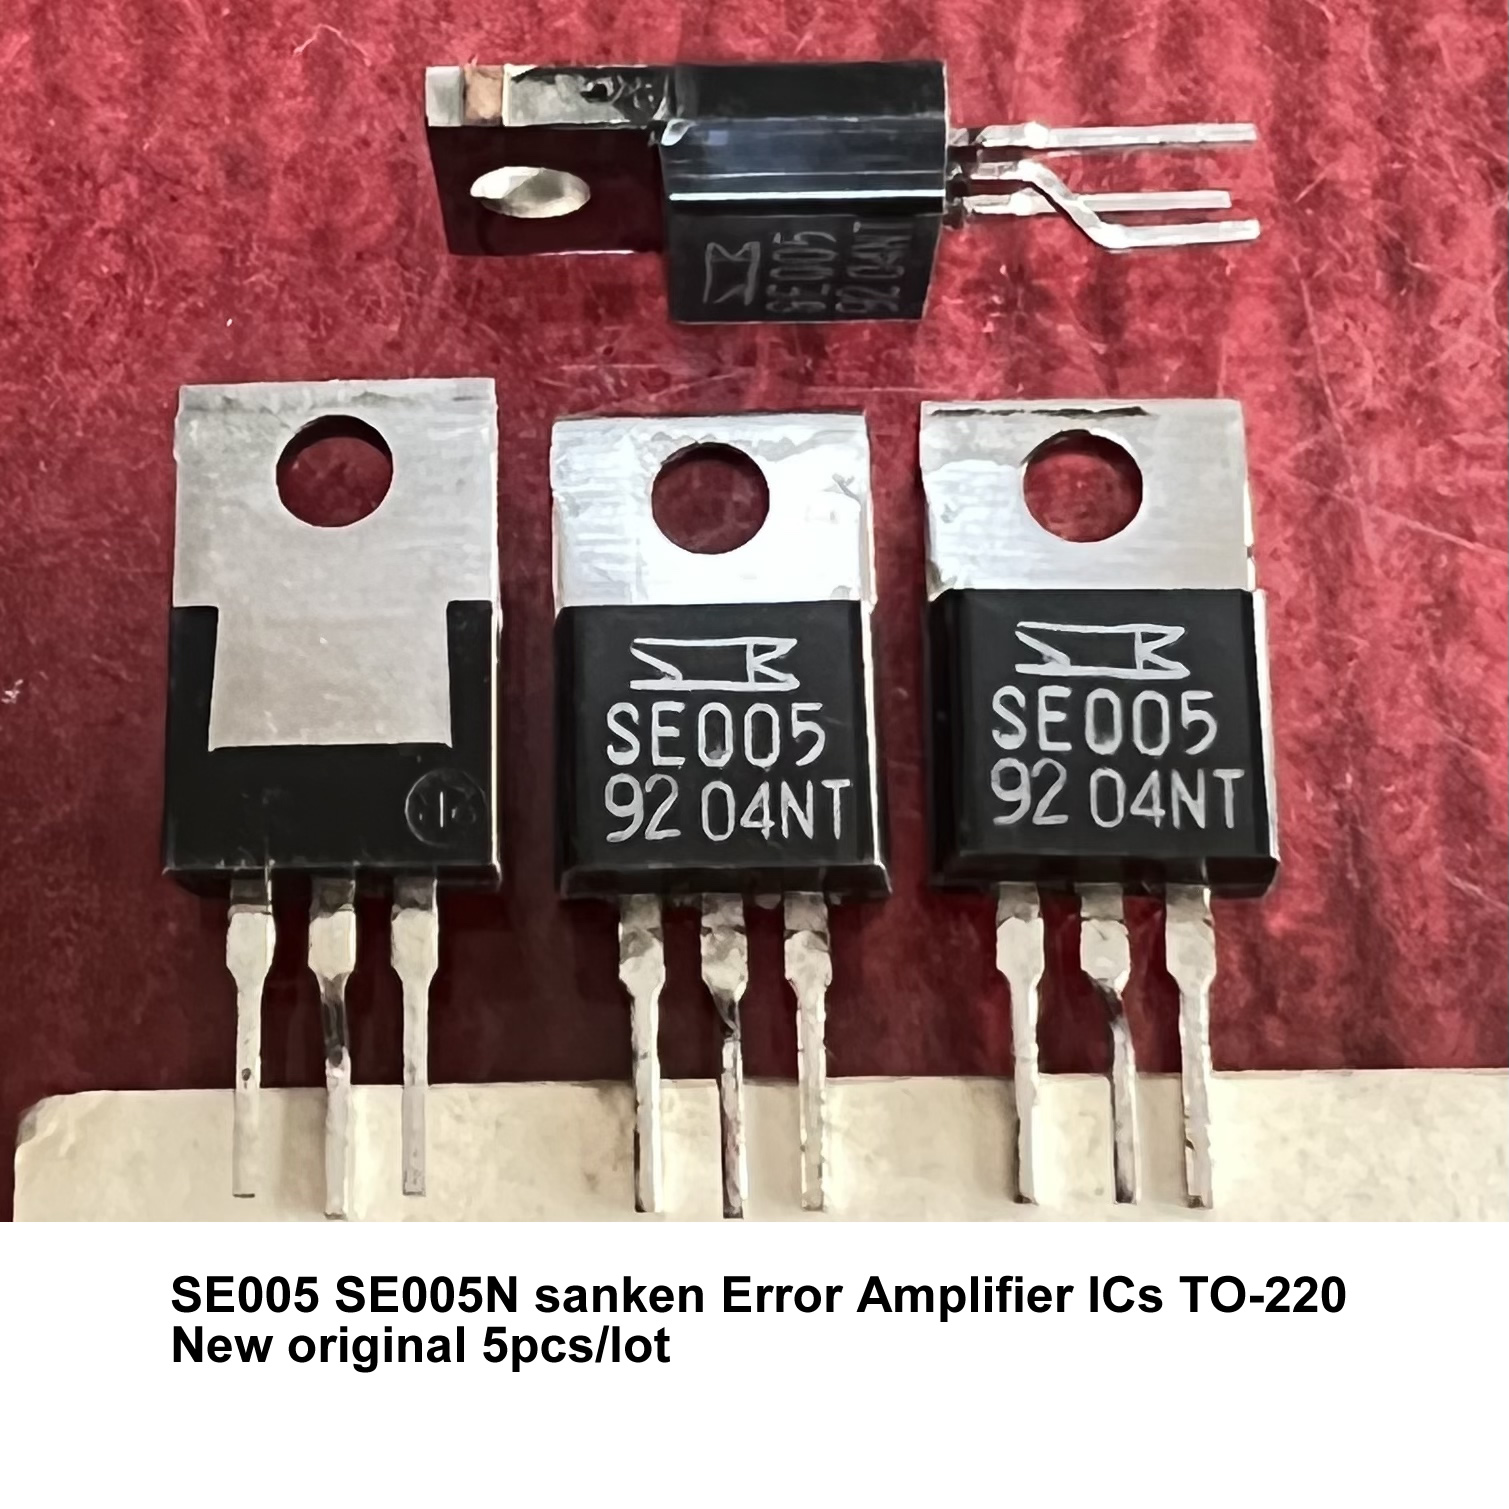 SE005 SE005N sanken Error Amplifier ICs TO-220 New original 5pcs